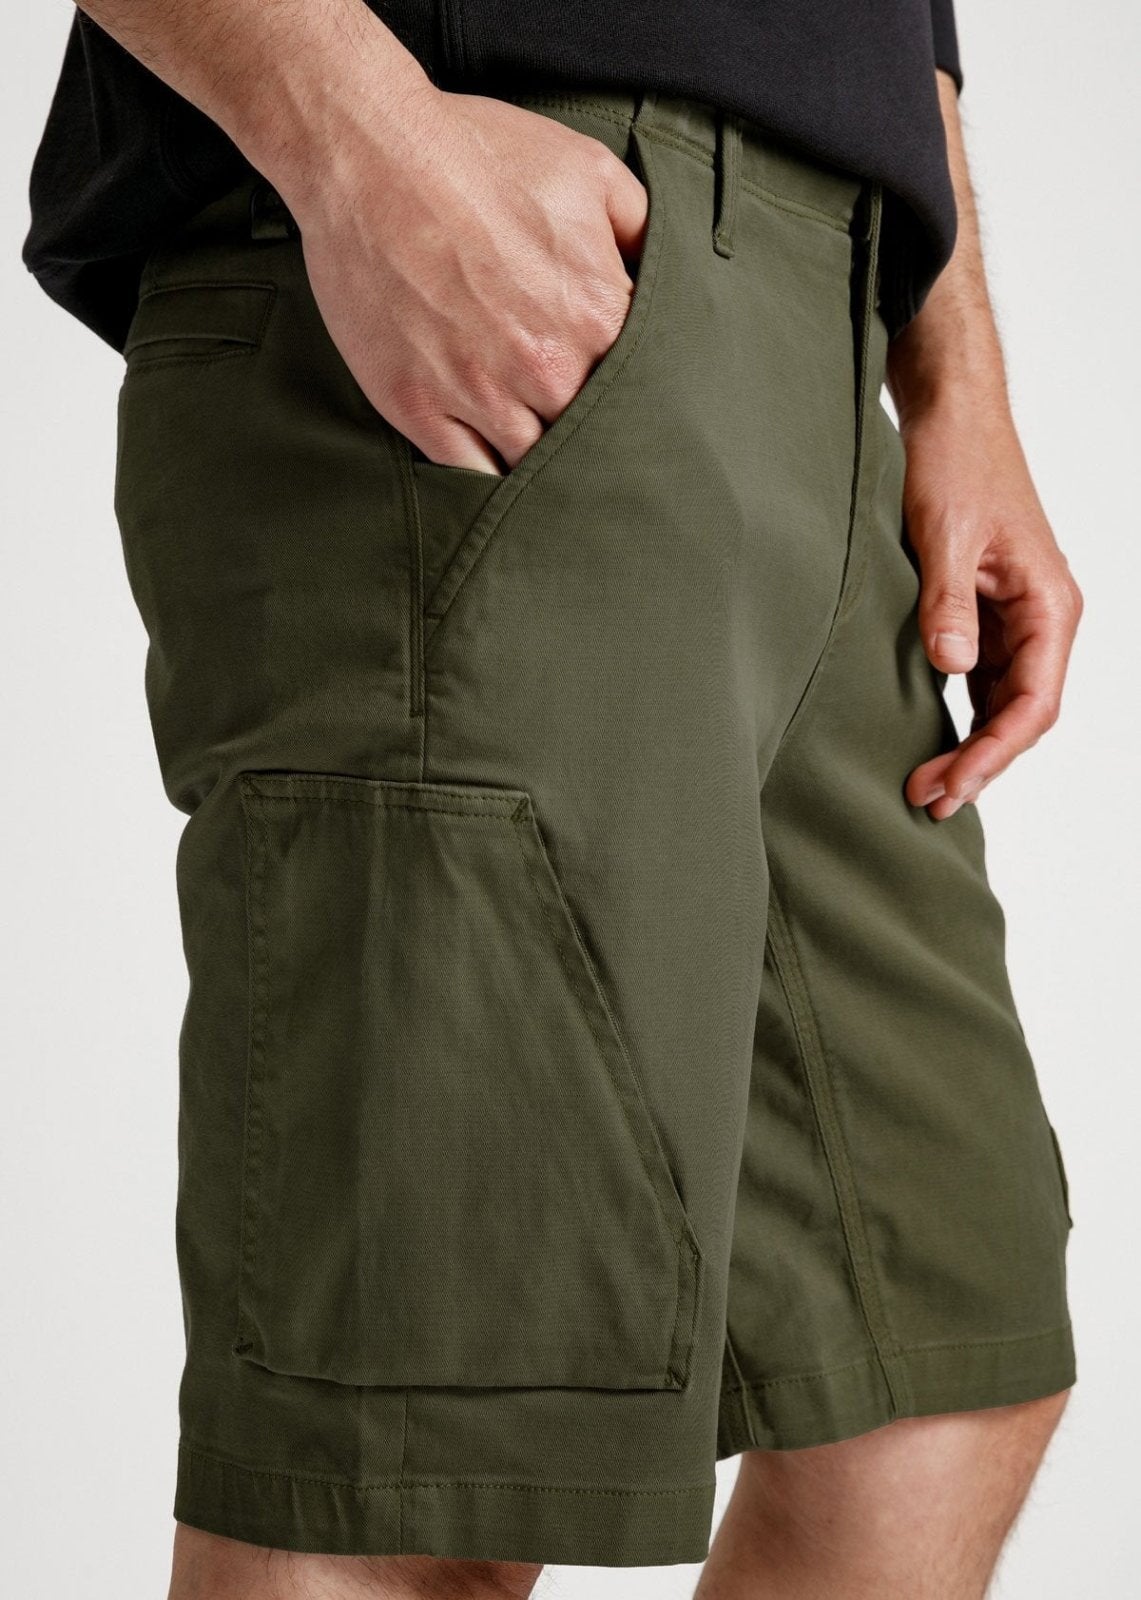 mens green athletic adventure pant pocket detail